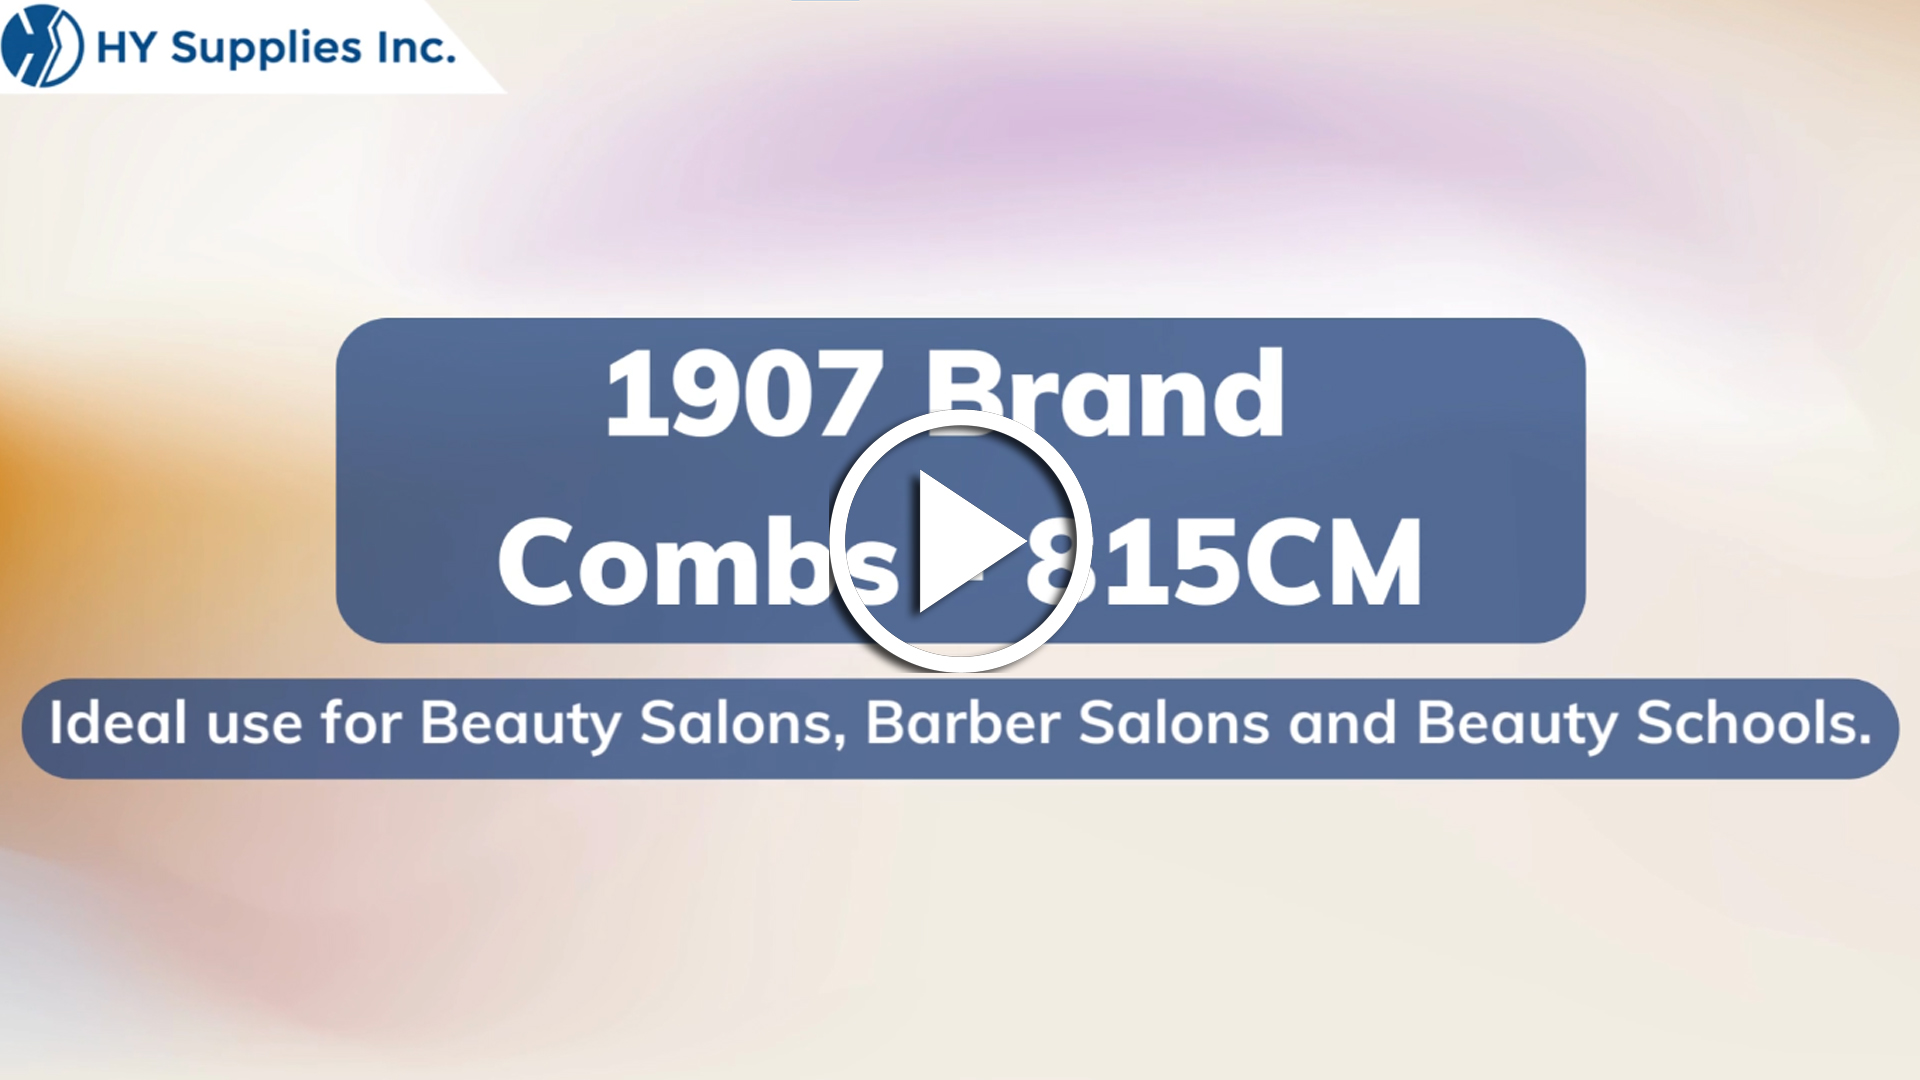 1907 Brand Combs - 815CM